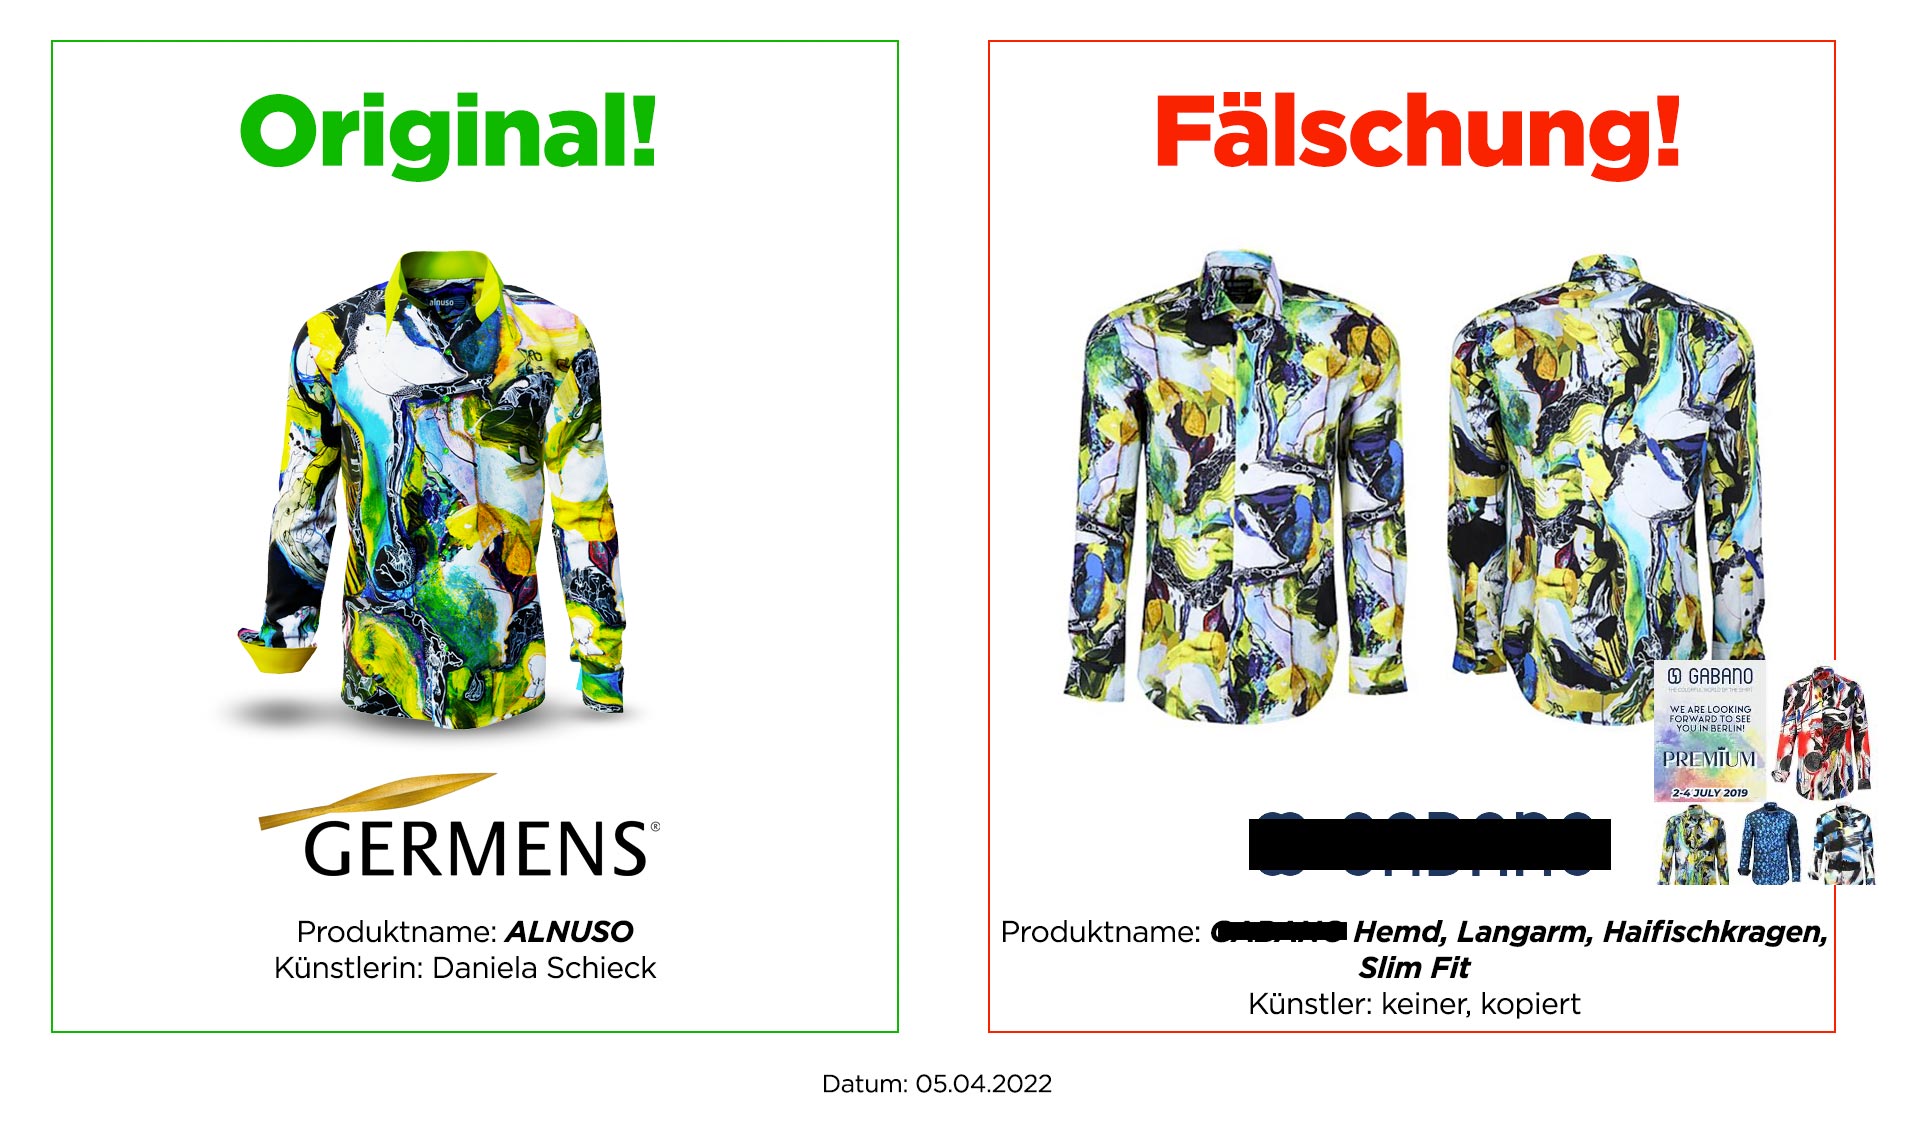 Original GERMENS® Hemd ALNUSO und Plagiat